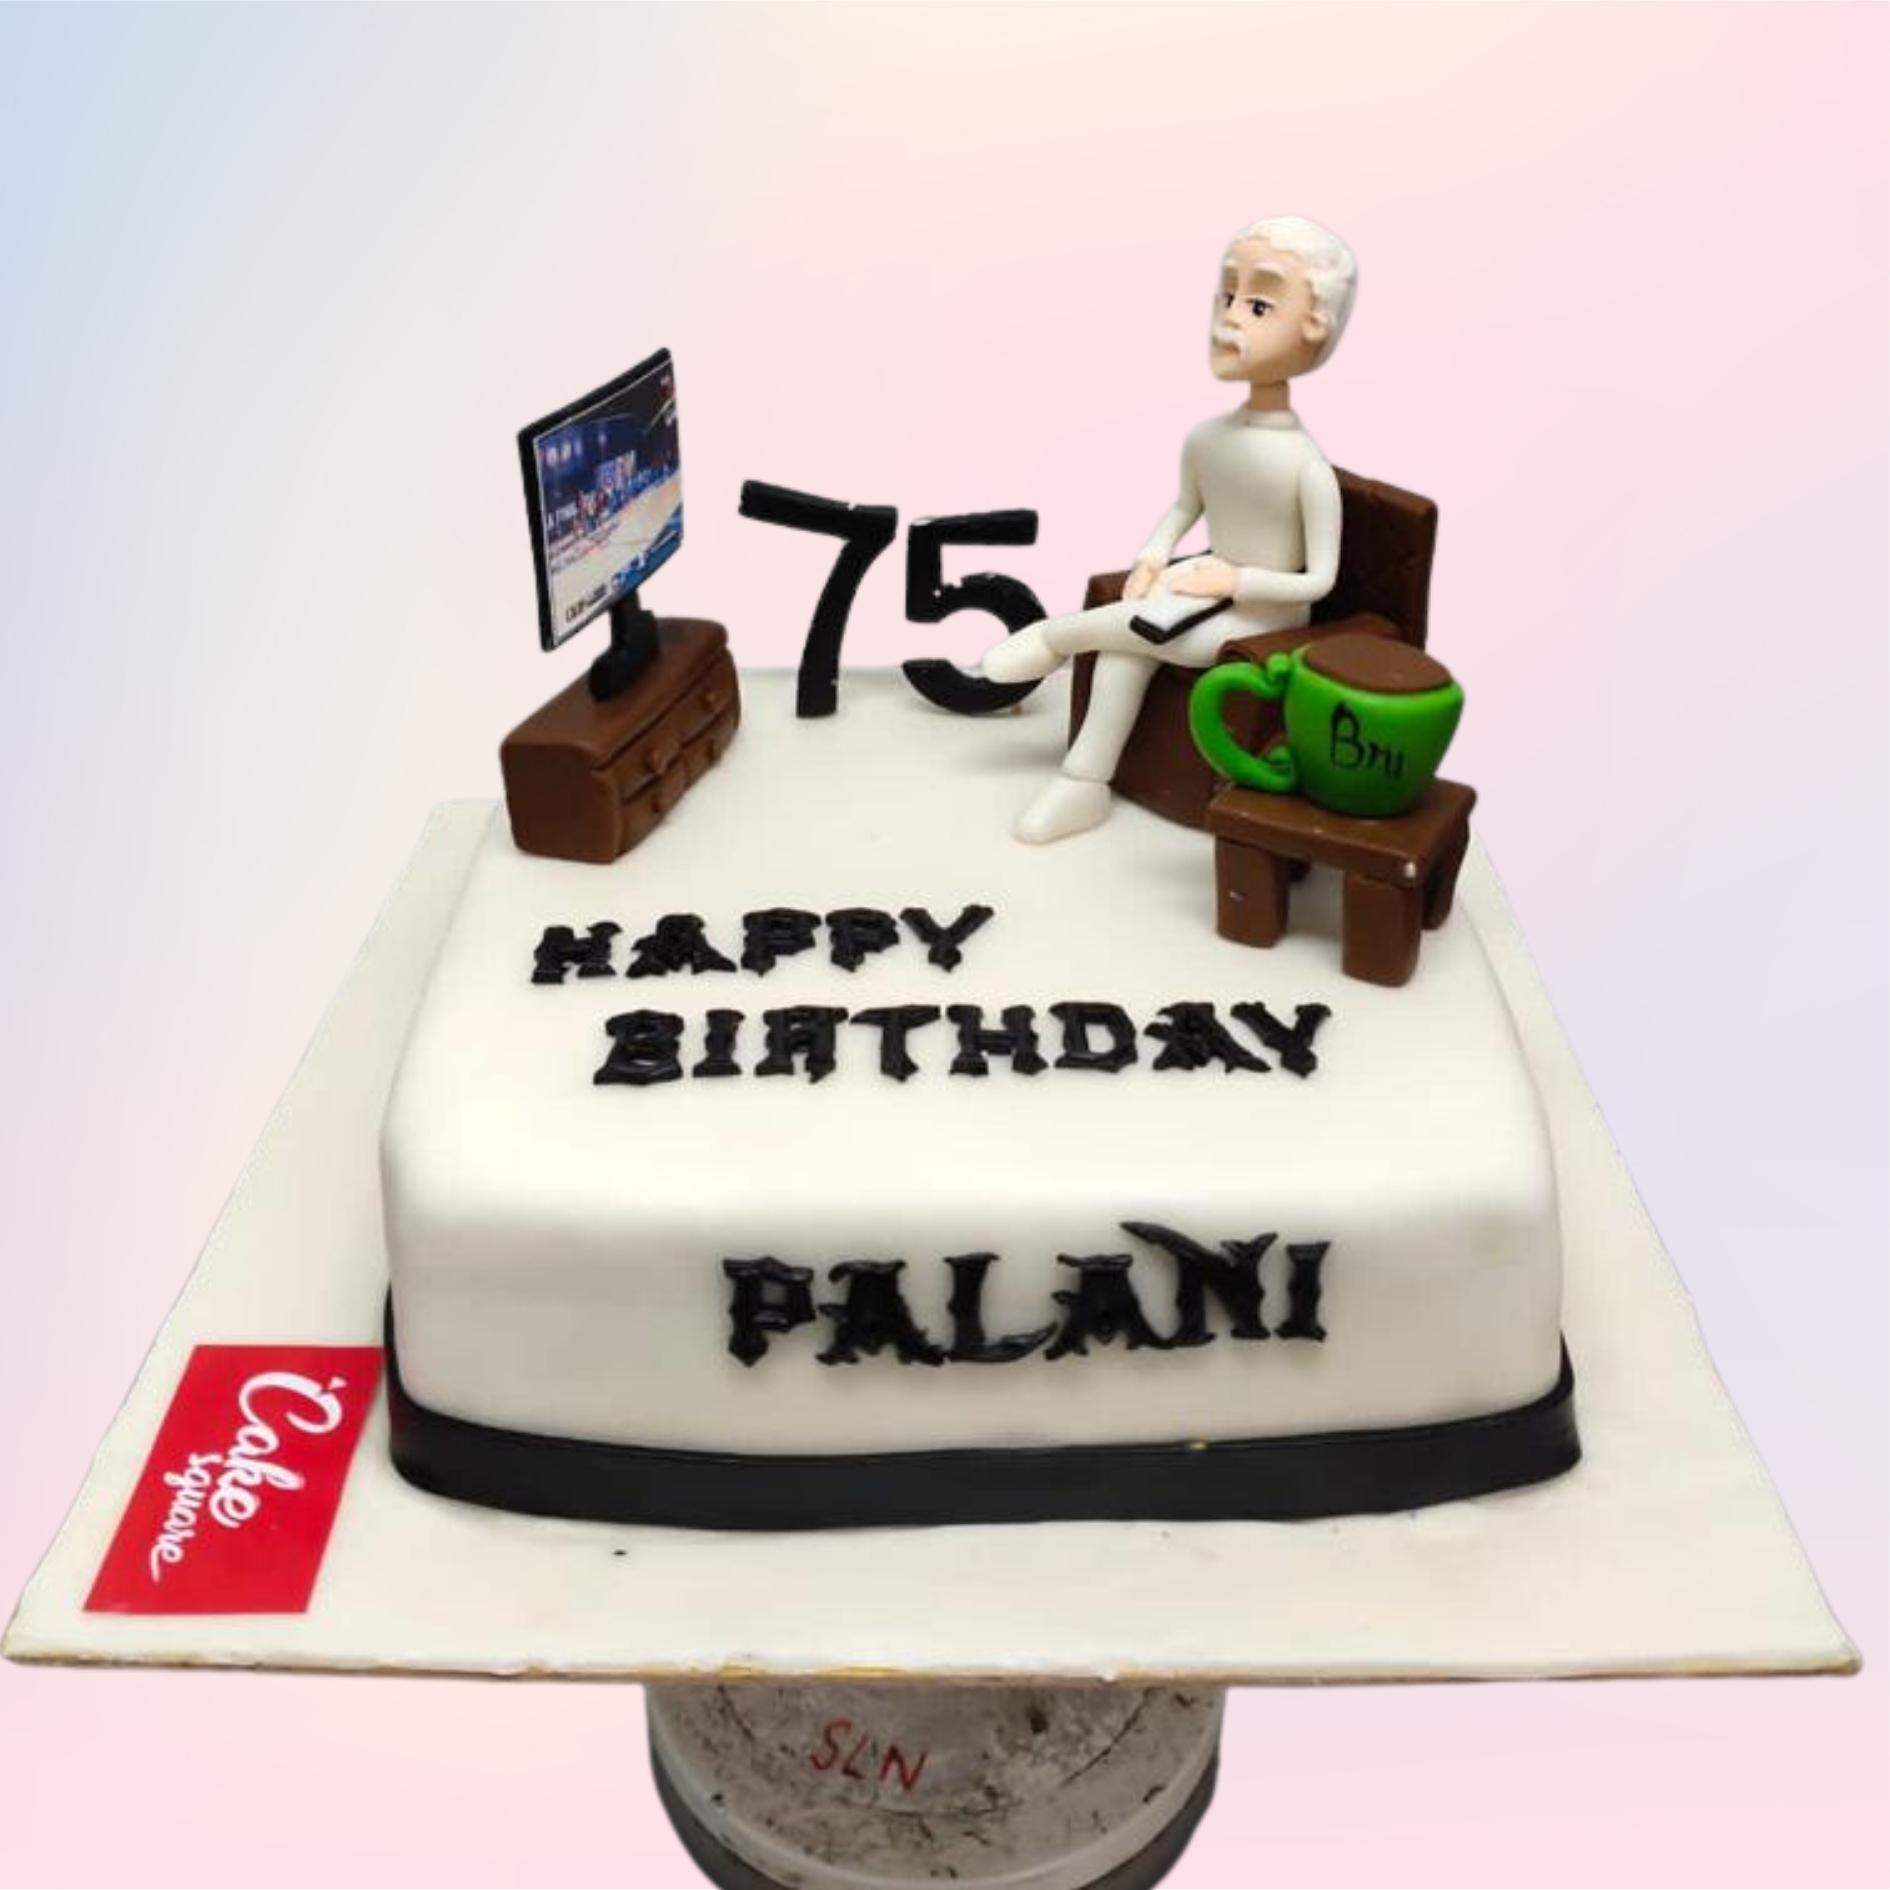 75th Birthday Cake #kjselegantpastries #customcakes #bakery #birthdaycake # cakes #cake #cakesofinstagram | Instagram